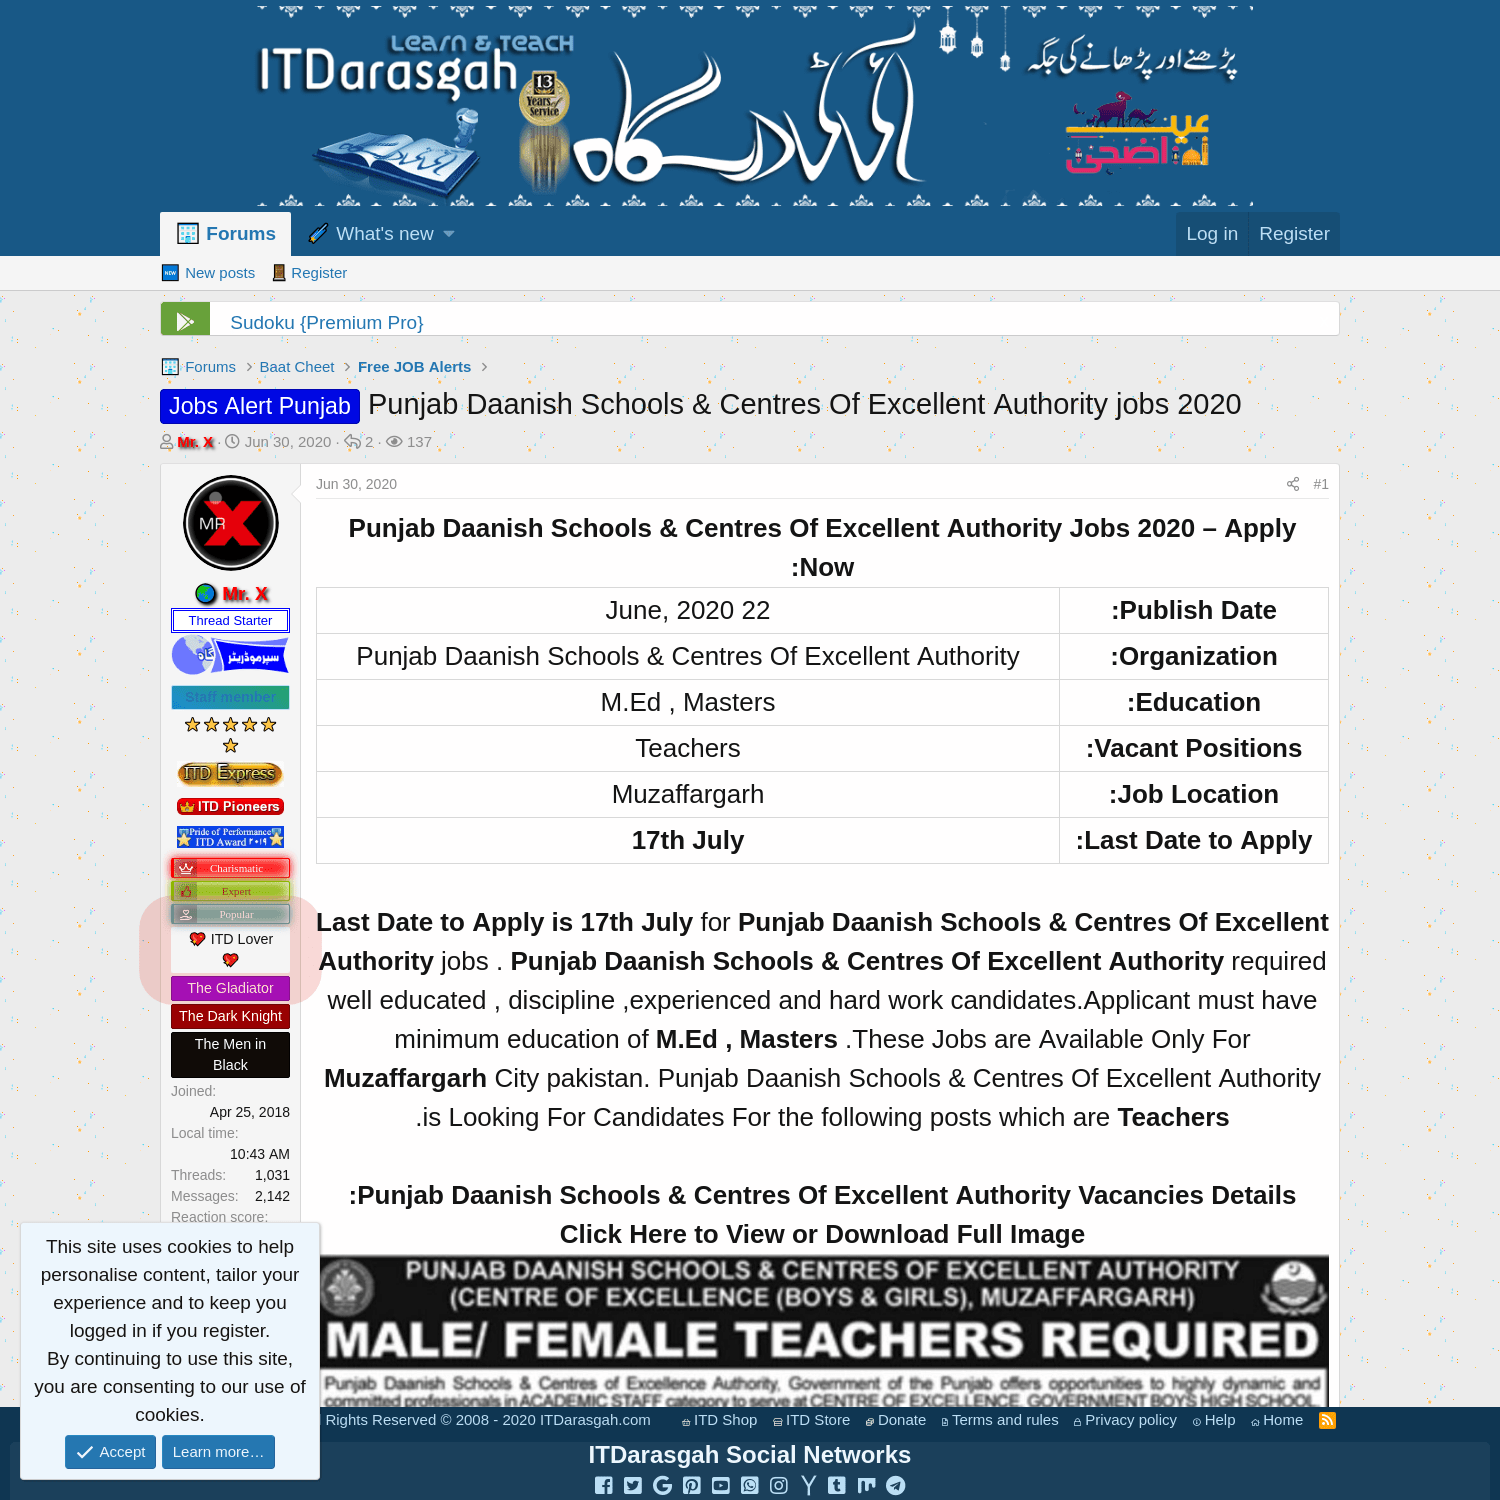 Jobs Alert Punjab - Punjab Daanish Schools & Centres Of Excellent Authority jobs 2020